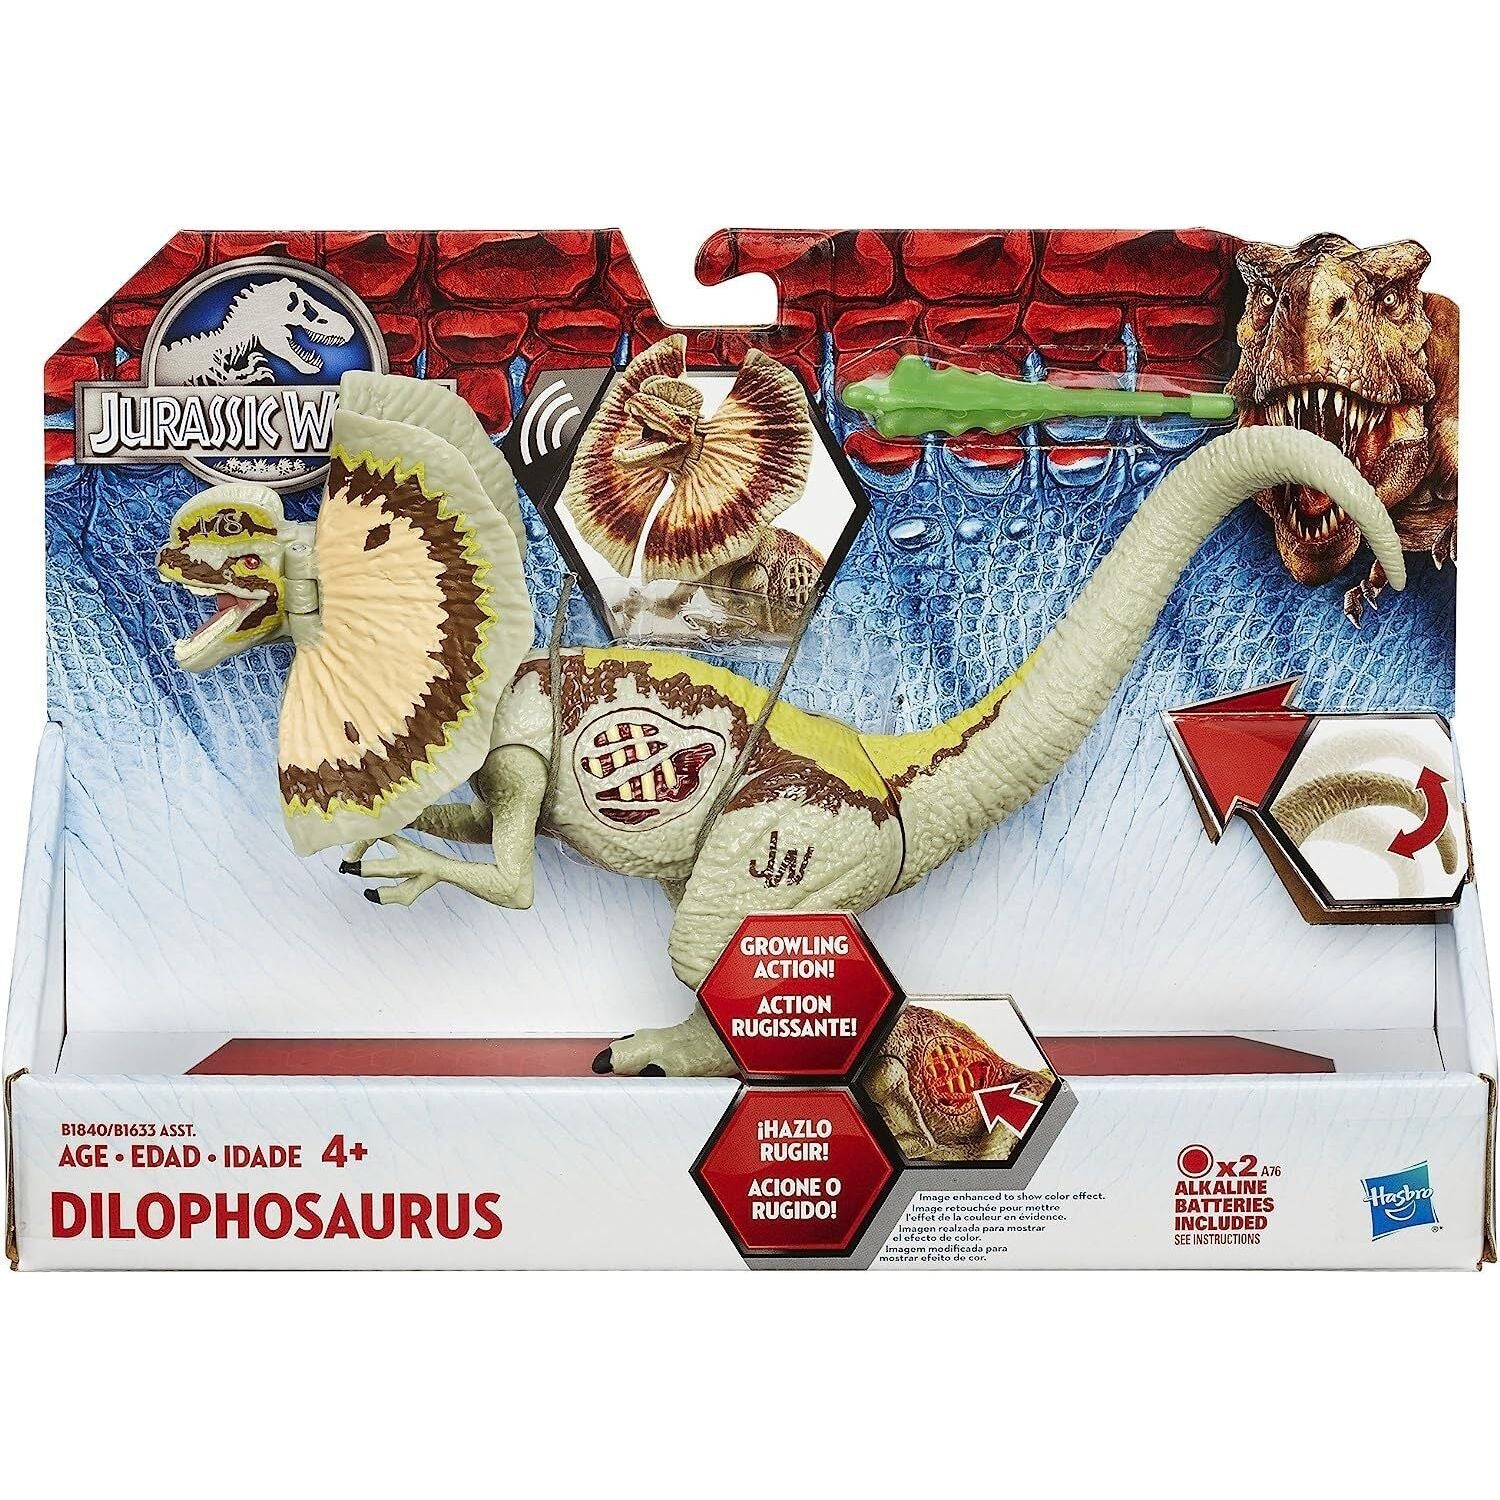 Jurassic World Dinosaur Toy - Dilophosaurus